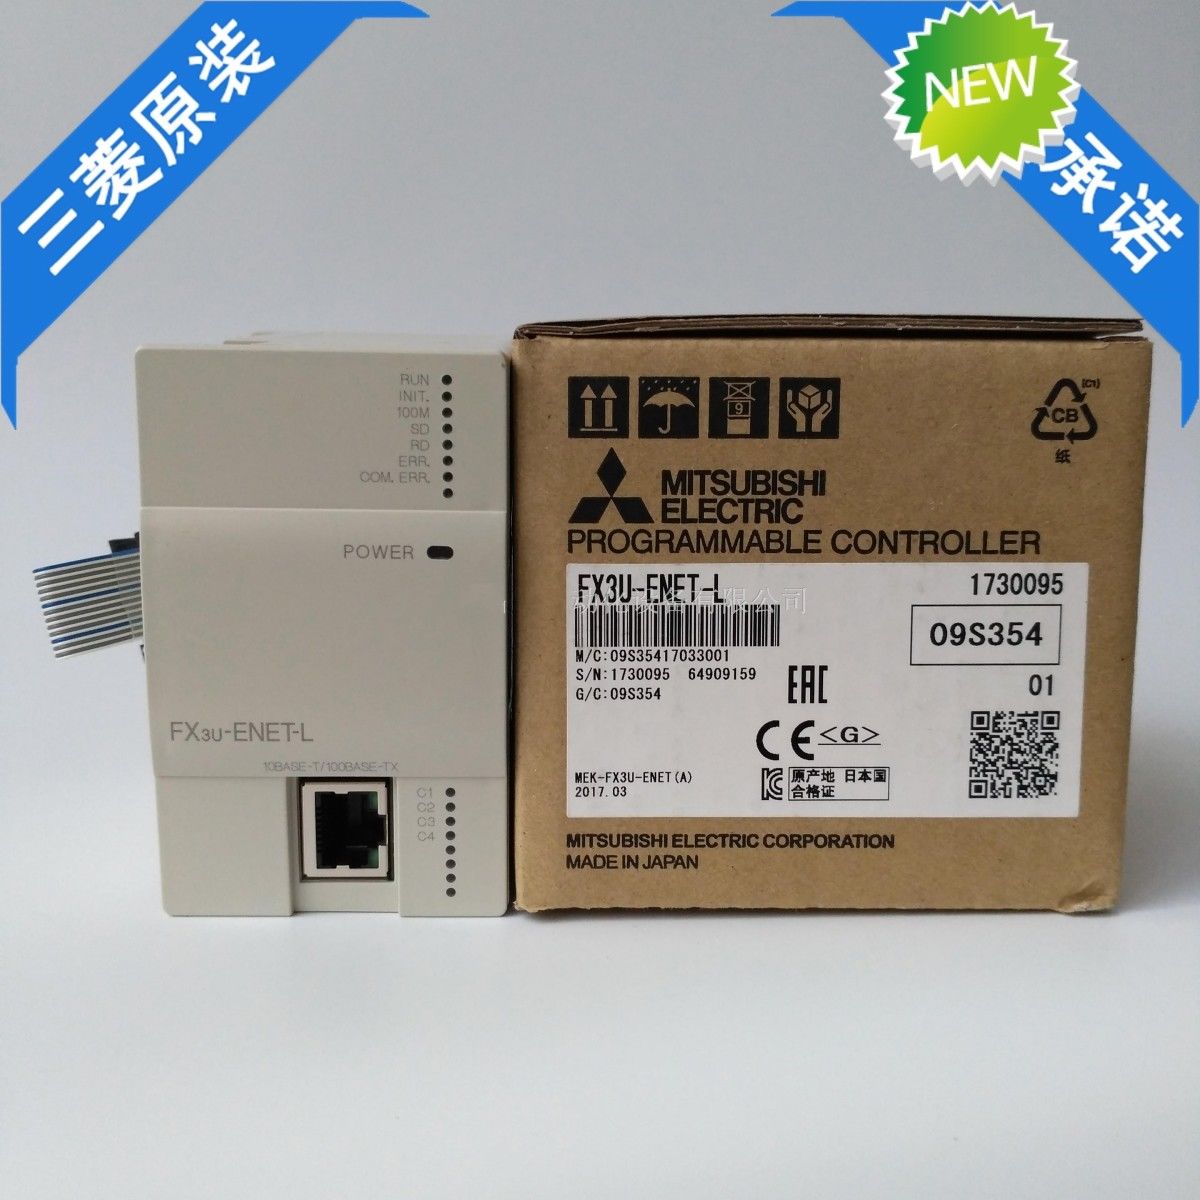 Mitsubishi FX3U-ENET-L CE Ethernet Connection Interface